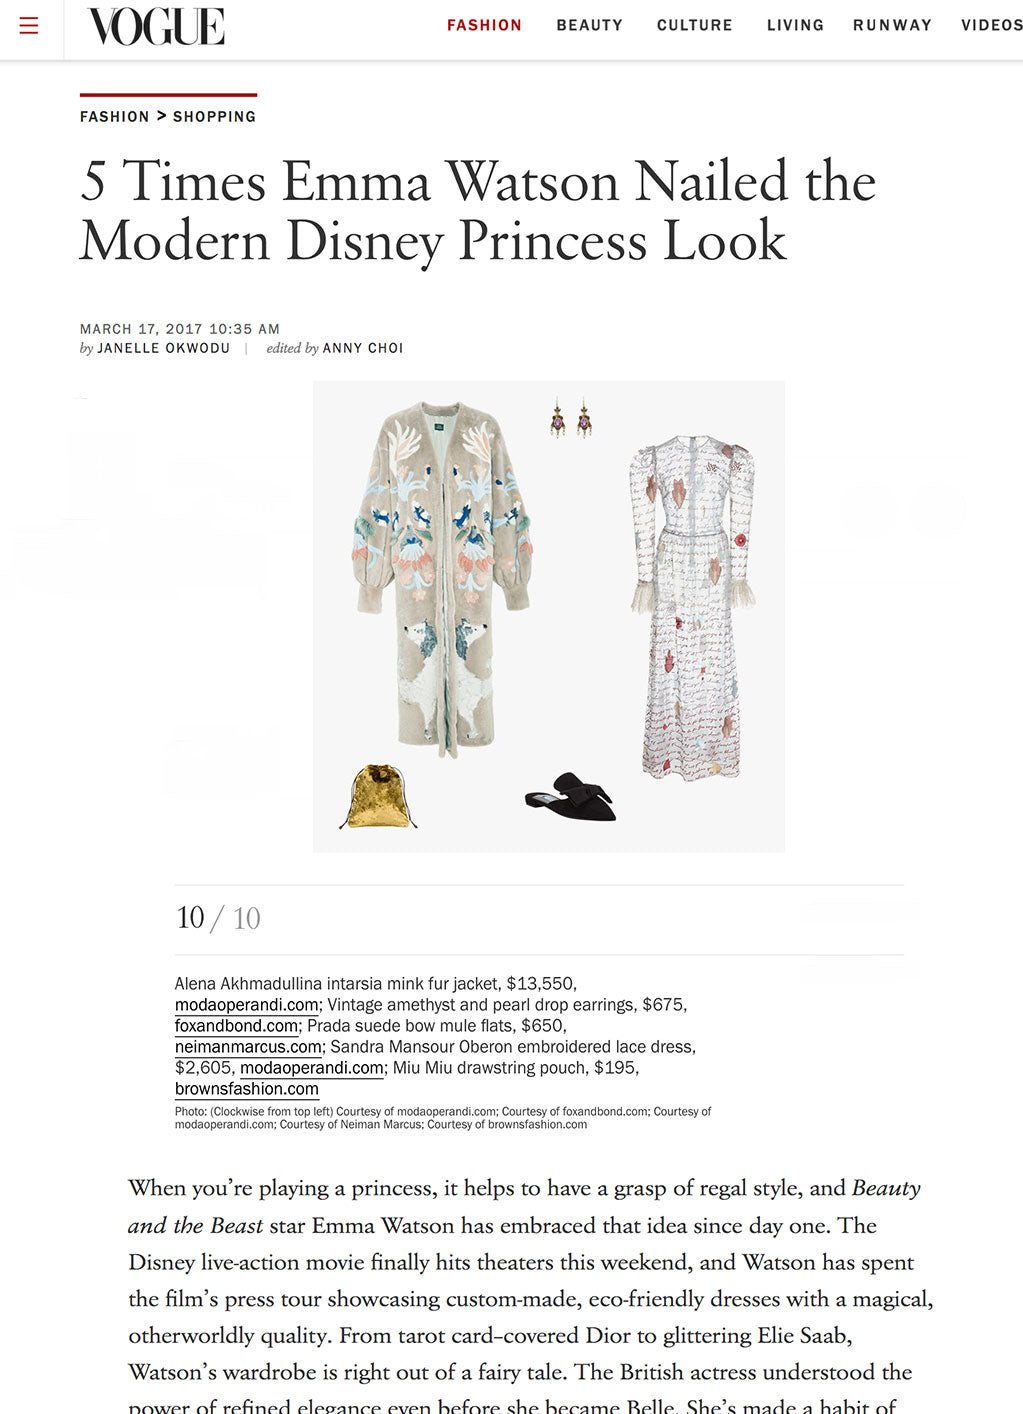 Vogue.com: 5 Times Emma Watson Nailed the Modern Disney Princess Look